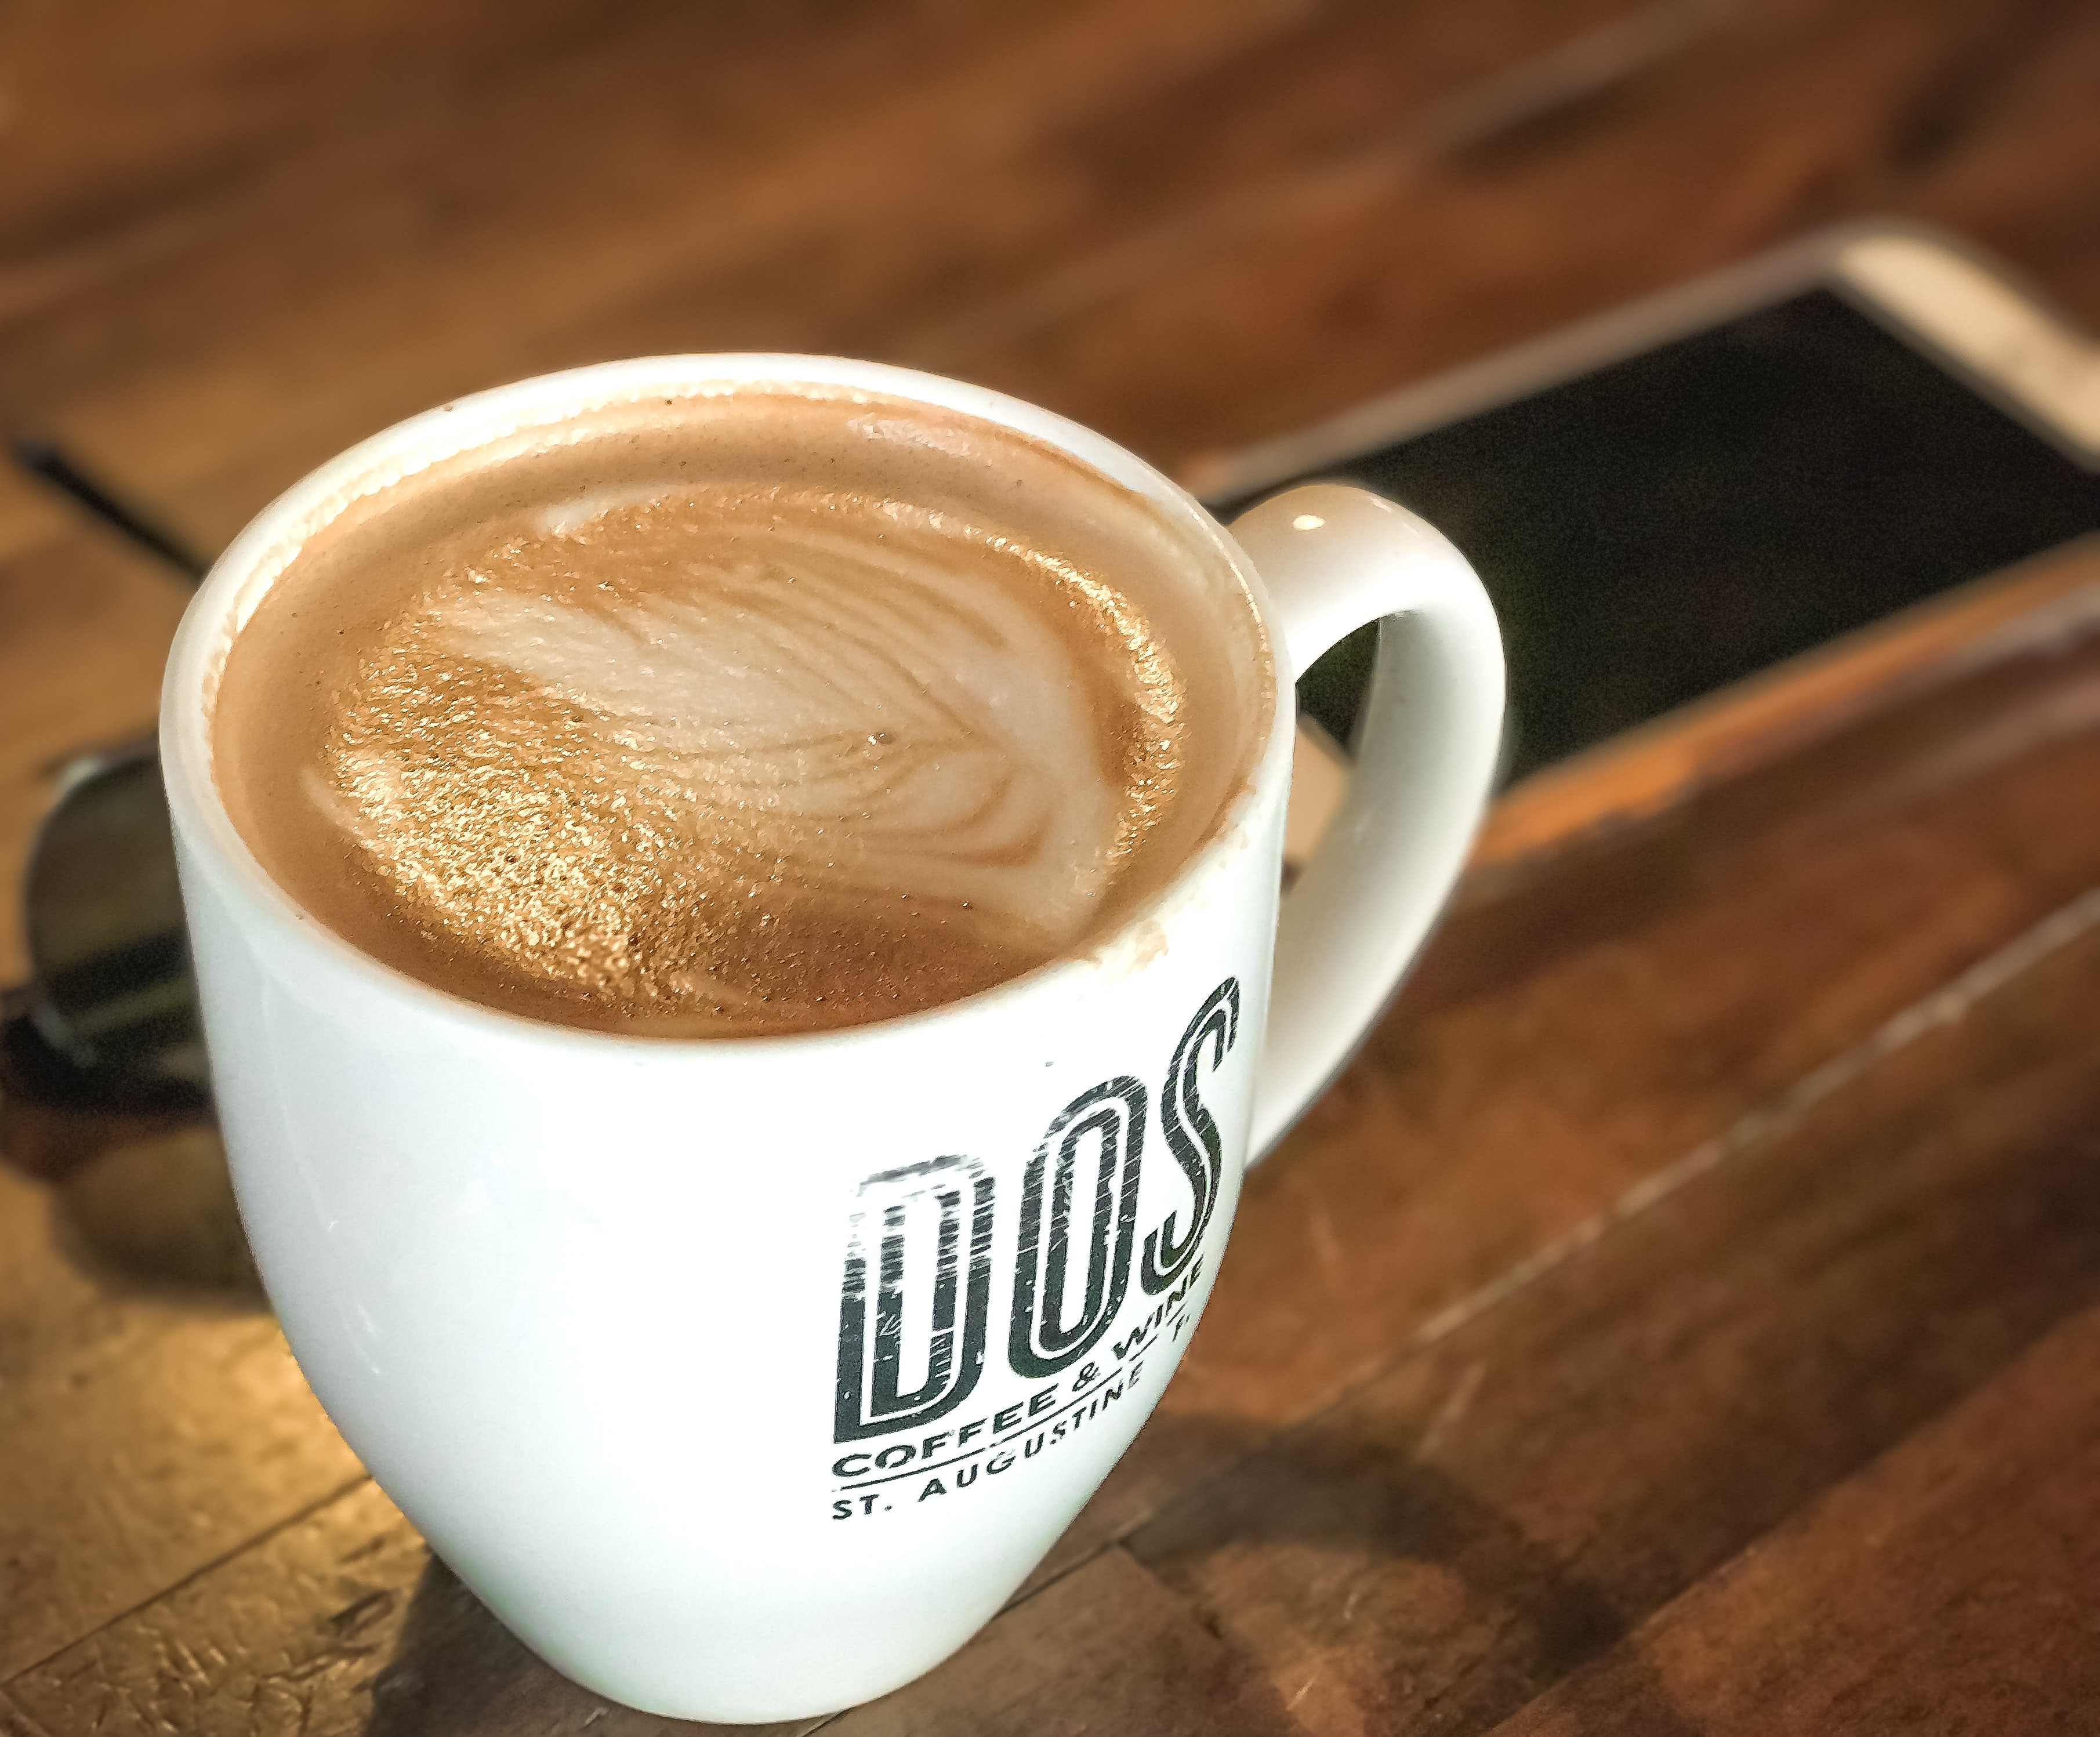 White Ceramic Coffee Mug With Brown Liquid, Blur, Foam, Wood, Table, HQ Photo